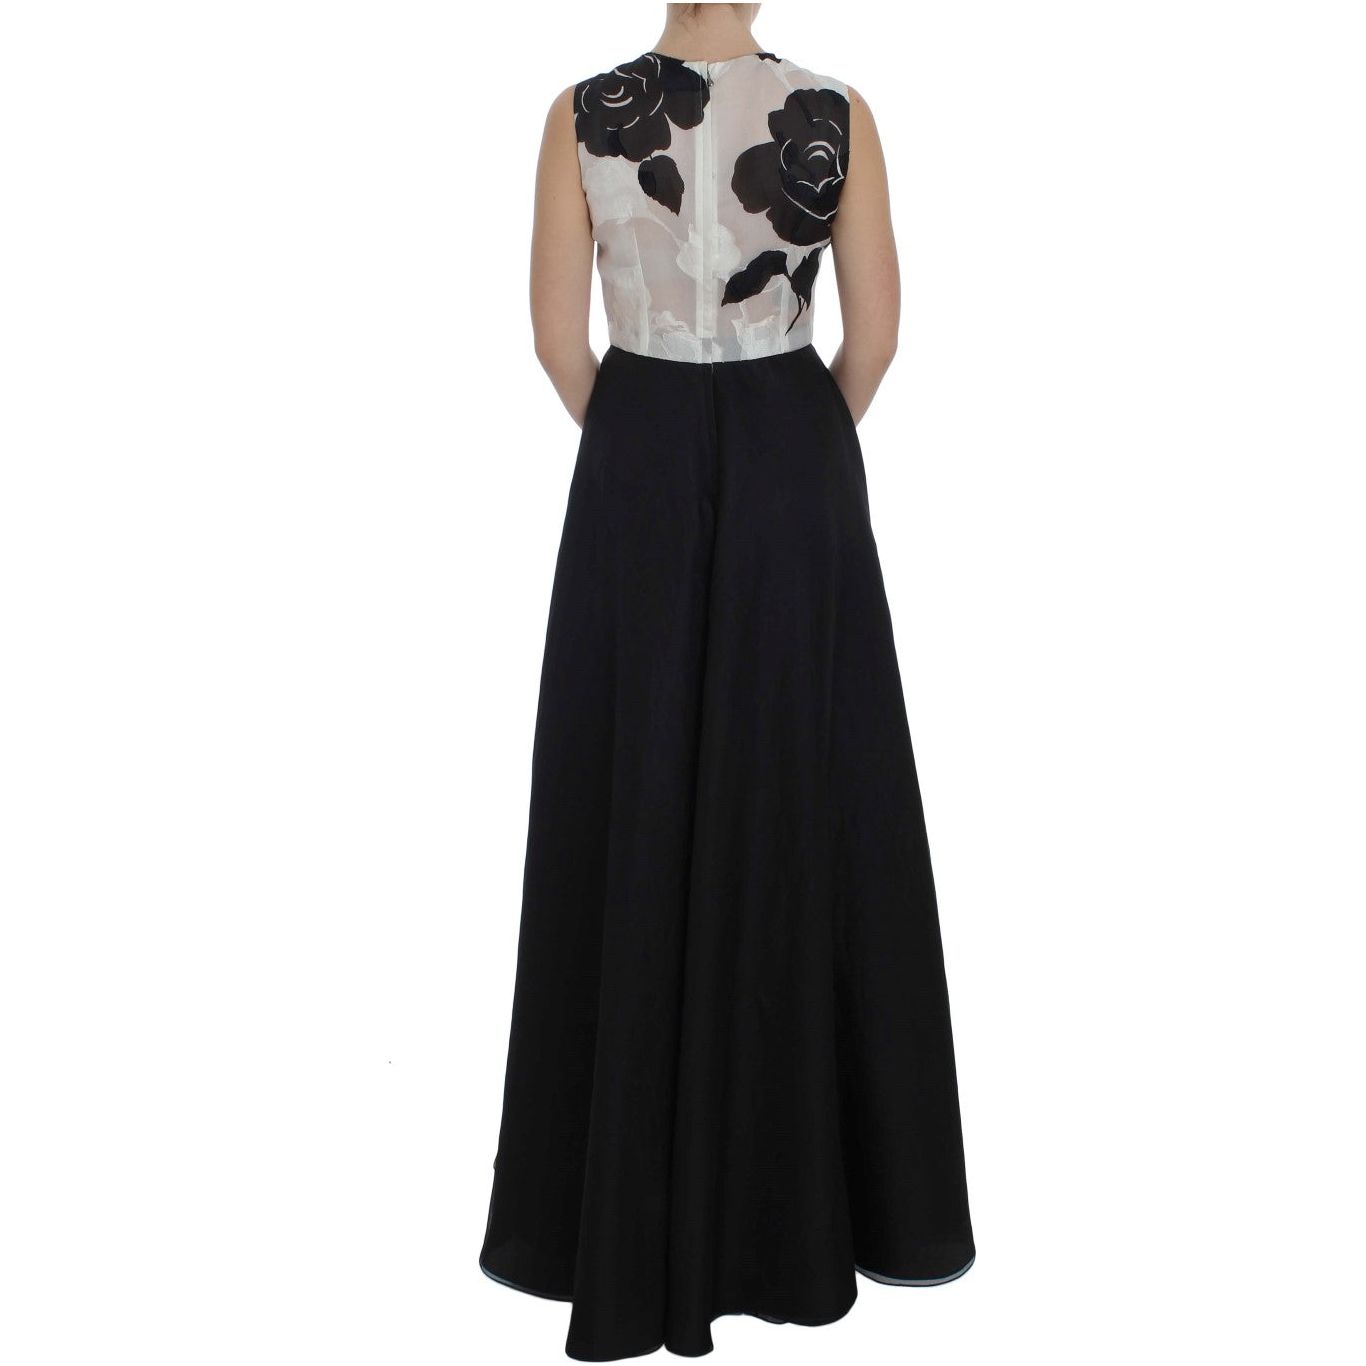 Dolce & Gabbana Elegant Floral Silk Full Length Dress black-white-floral-silk-sheath-gown-dress 72716-black-white-floral-silk-sheath-gown-dress-2.jpg